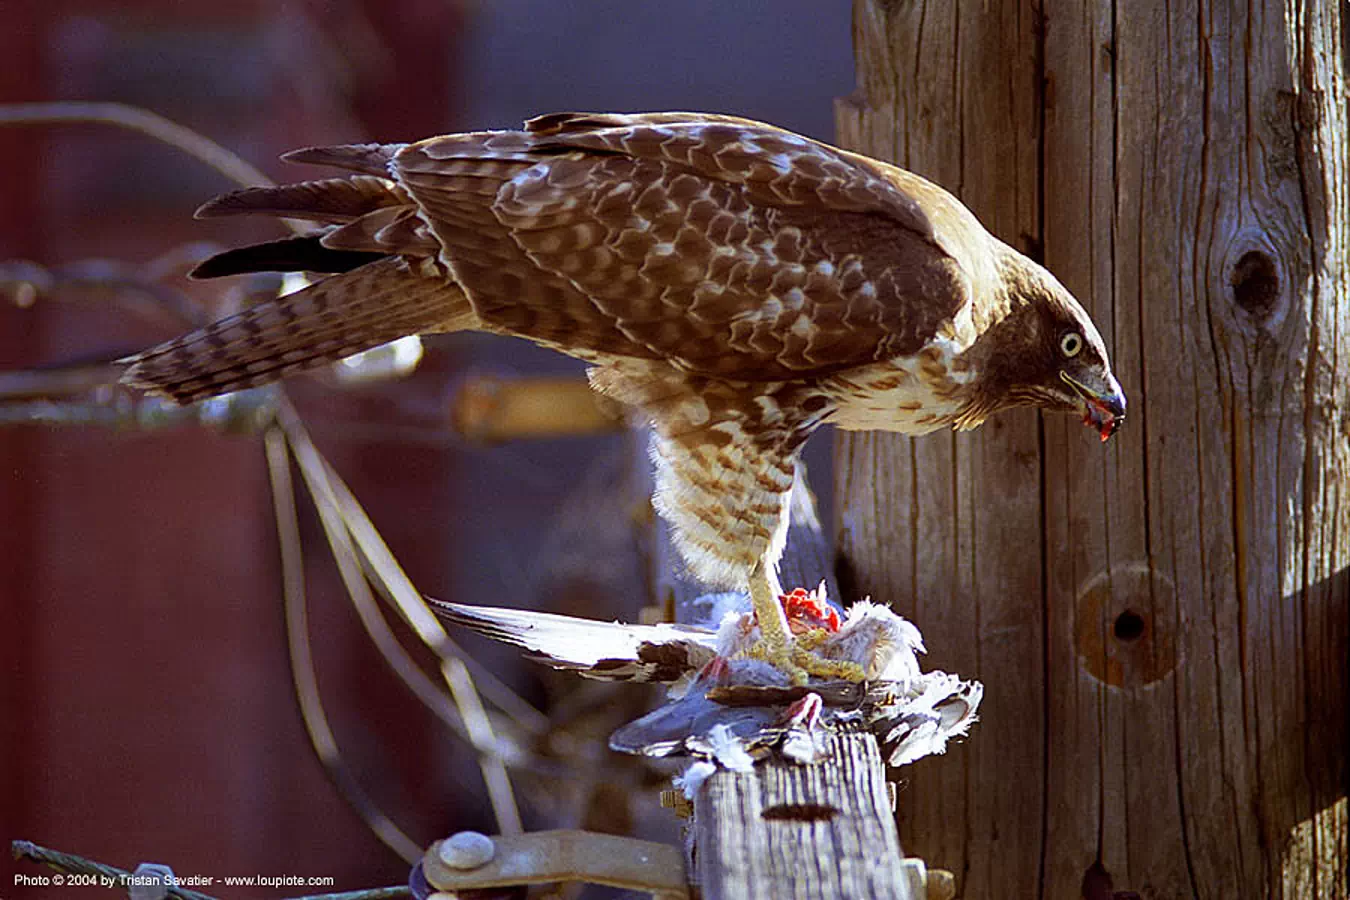 red-tailed hawk eating pigeon, bird of prey, birds, buteo jamaicensis, carnivorous, eating, fresh kill, rapace, raptor, red-tailed hawk, wild bird, wildlife